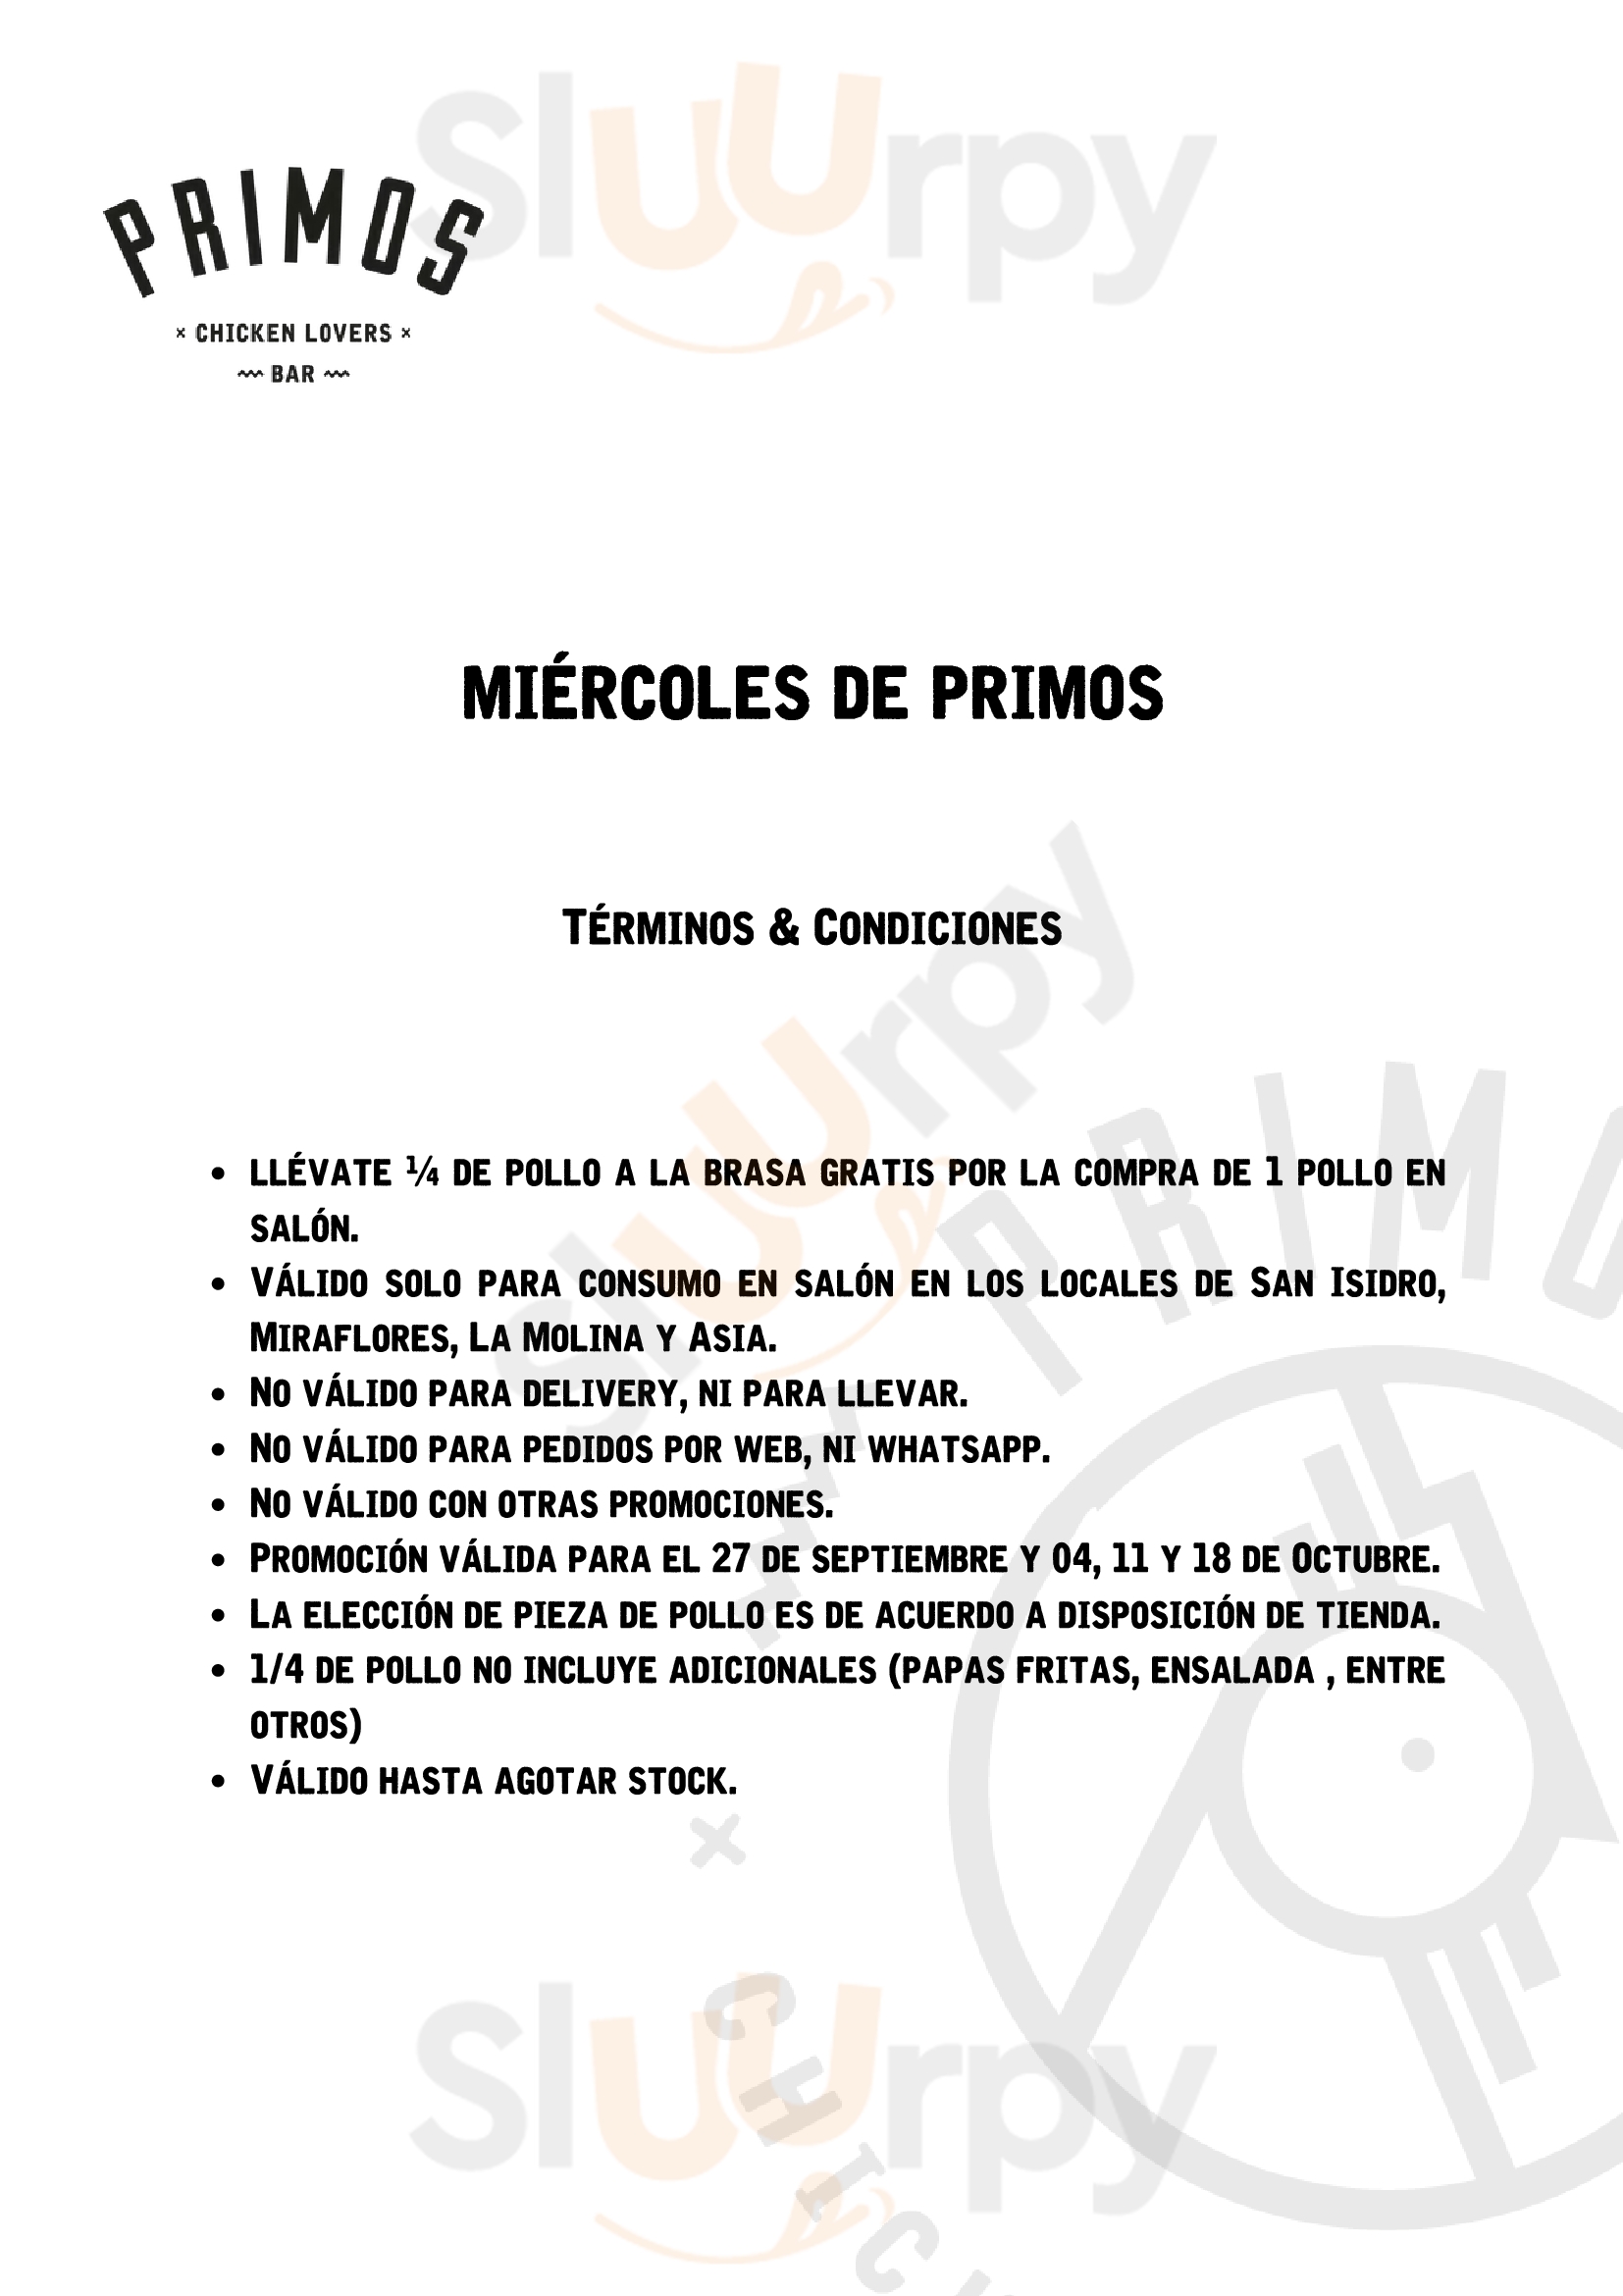 Primos Chicken Bar Lima Menu - 1